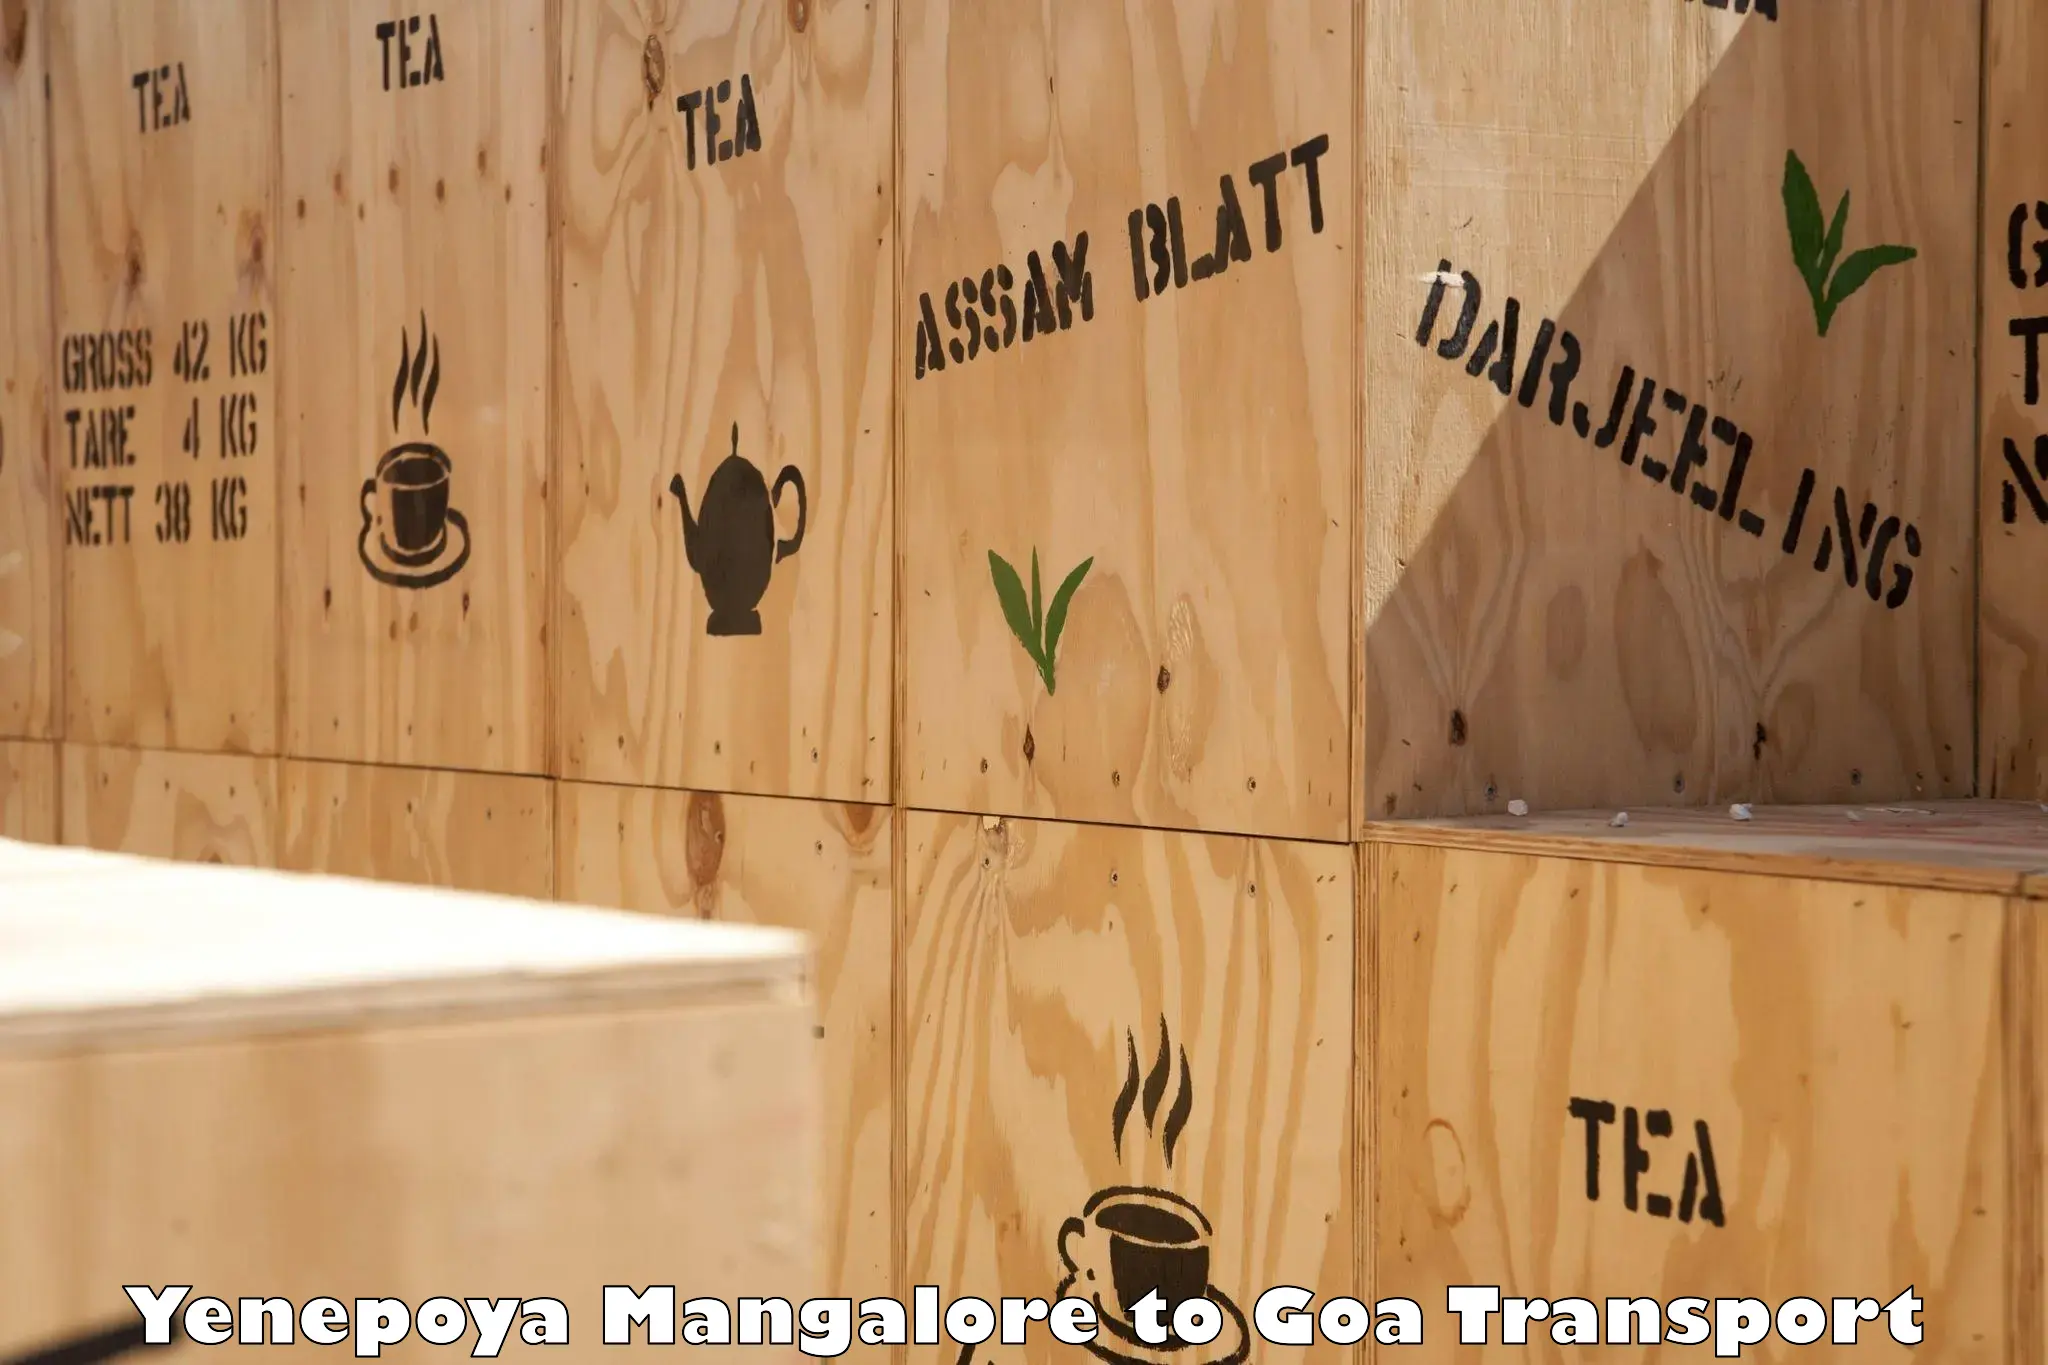 Container transport service Yenepoya Mangalore to Goa